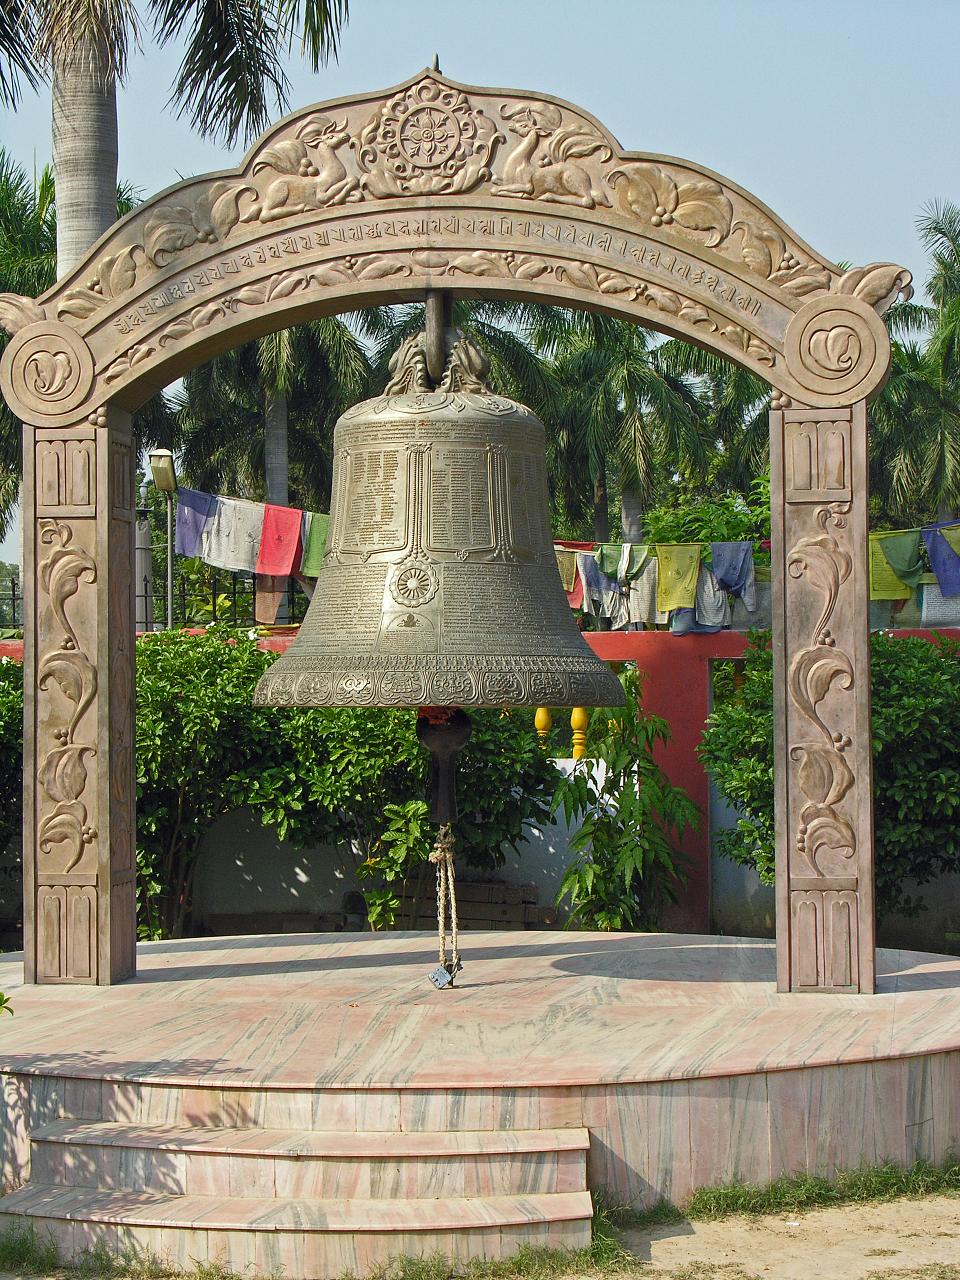 File:Big bell. Rewalsar.jpg - Wikipedia